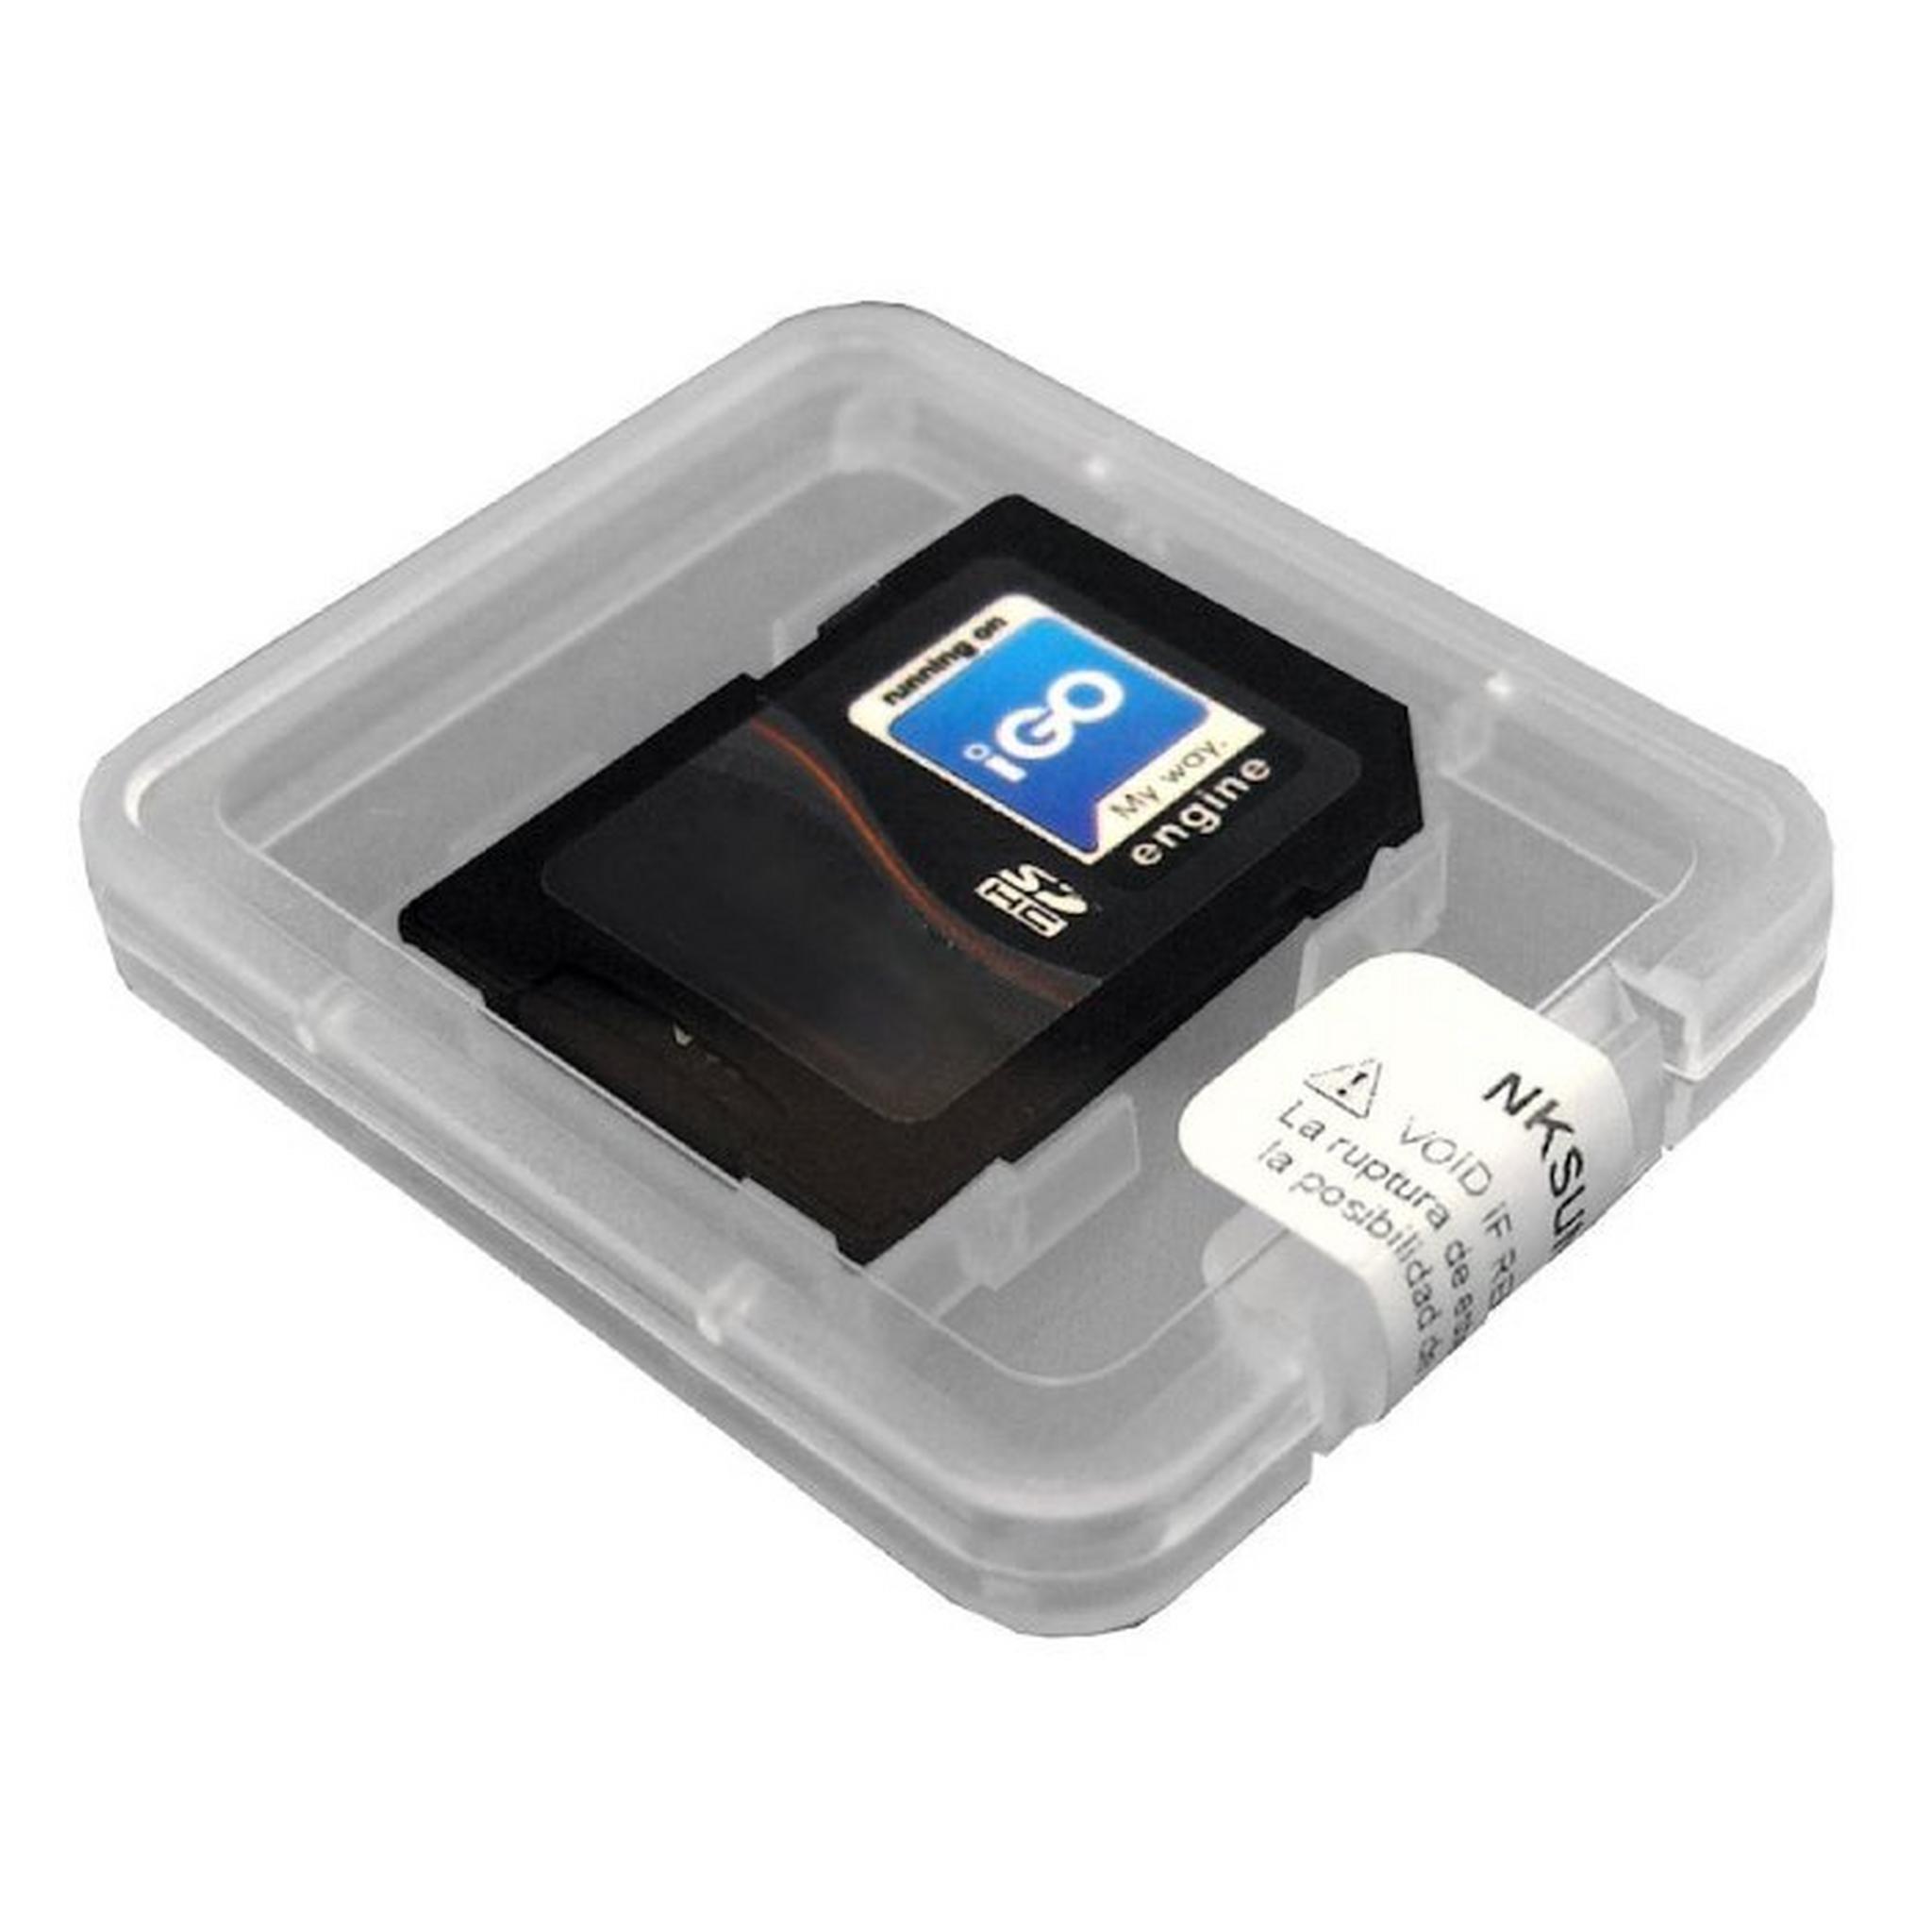 I-GO SD 16GB 80MBs Class 10 Memory Card